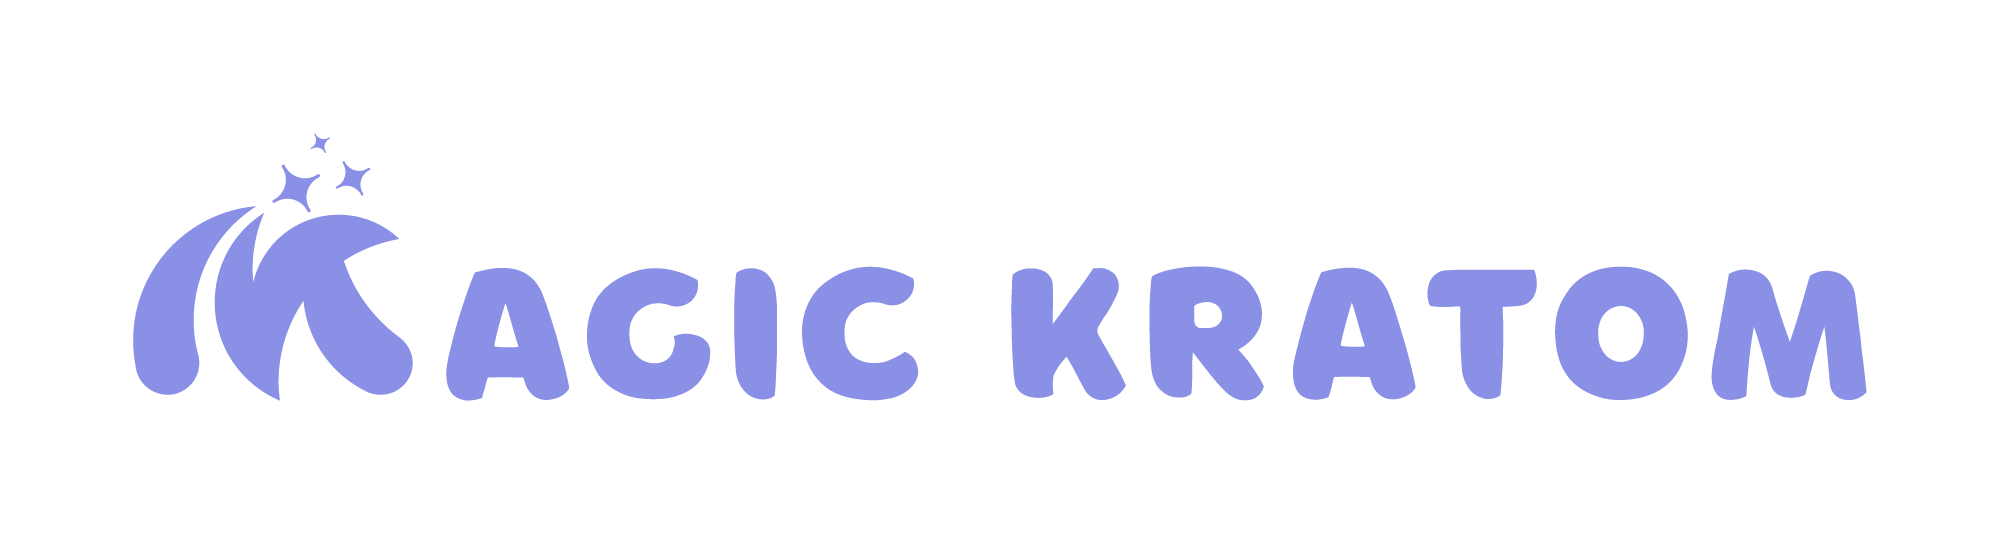 Magic Kratom Logo